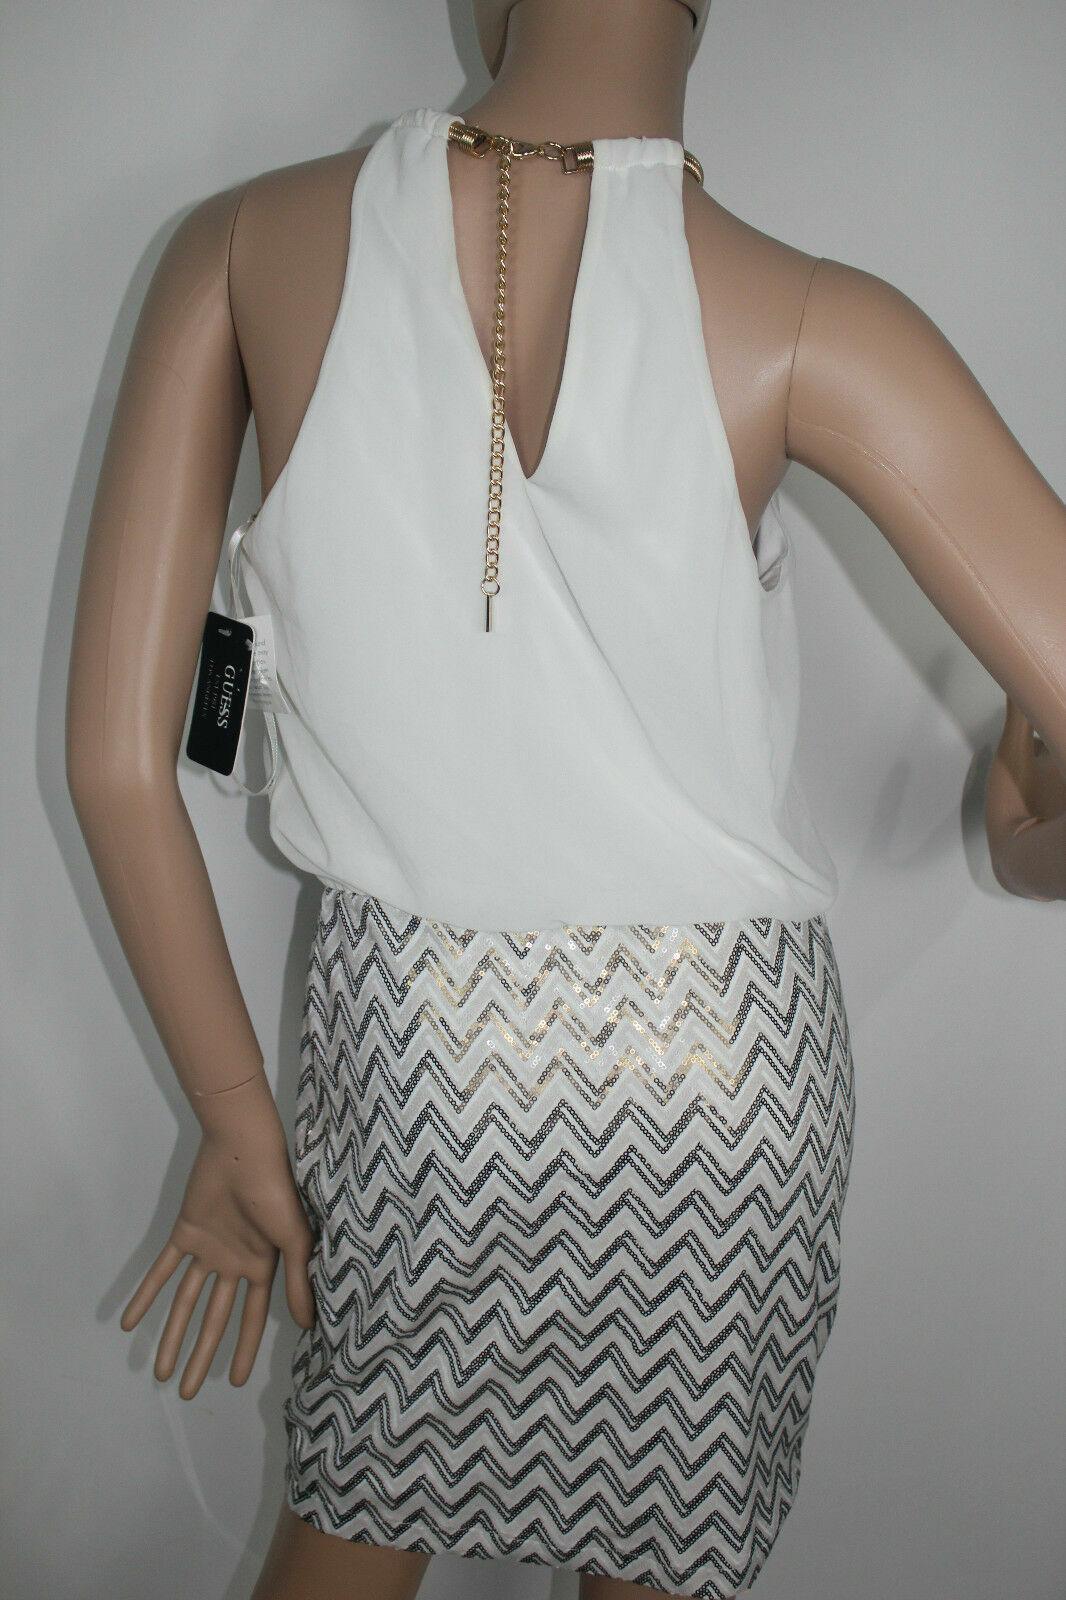 Guess Women's Sequins Chevron Pattern Keyhole Blouson Dress Size 2 - SVNYFancy